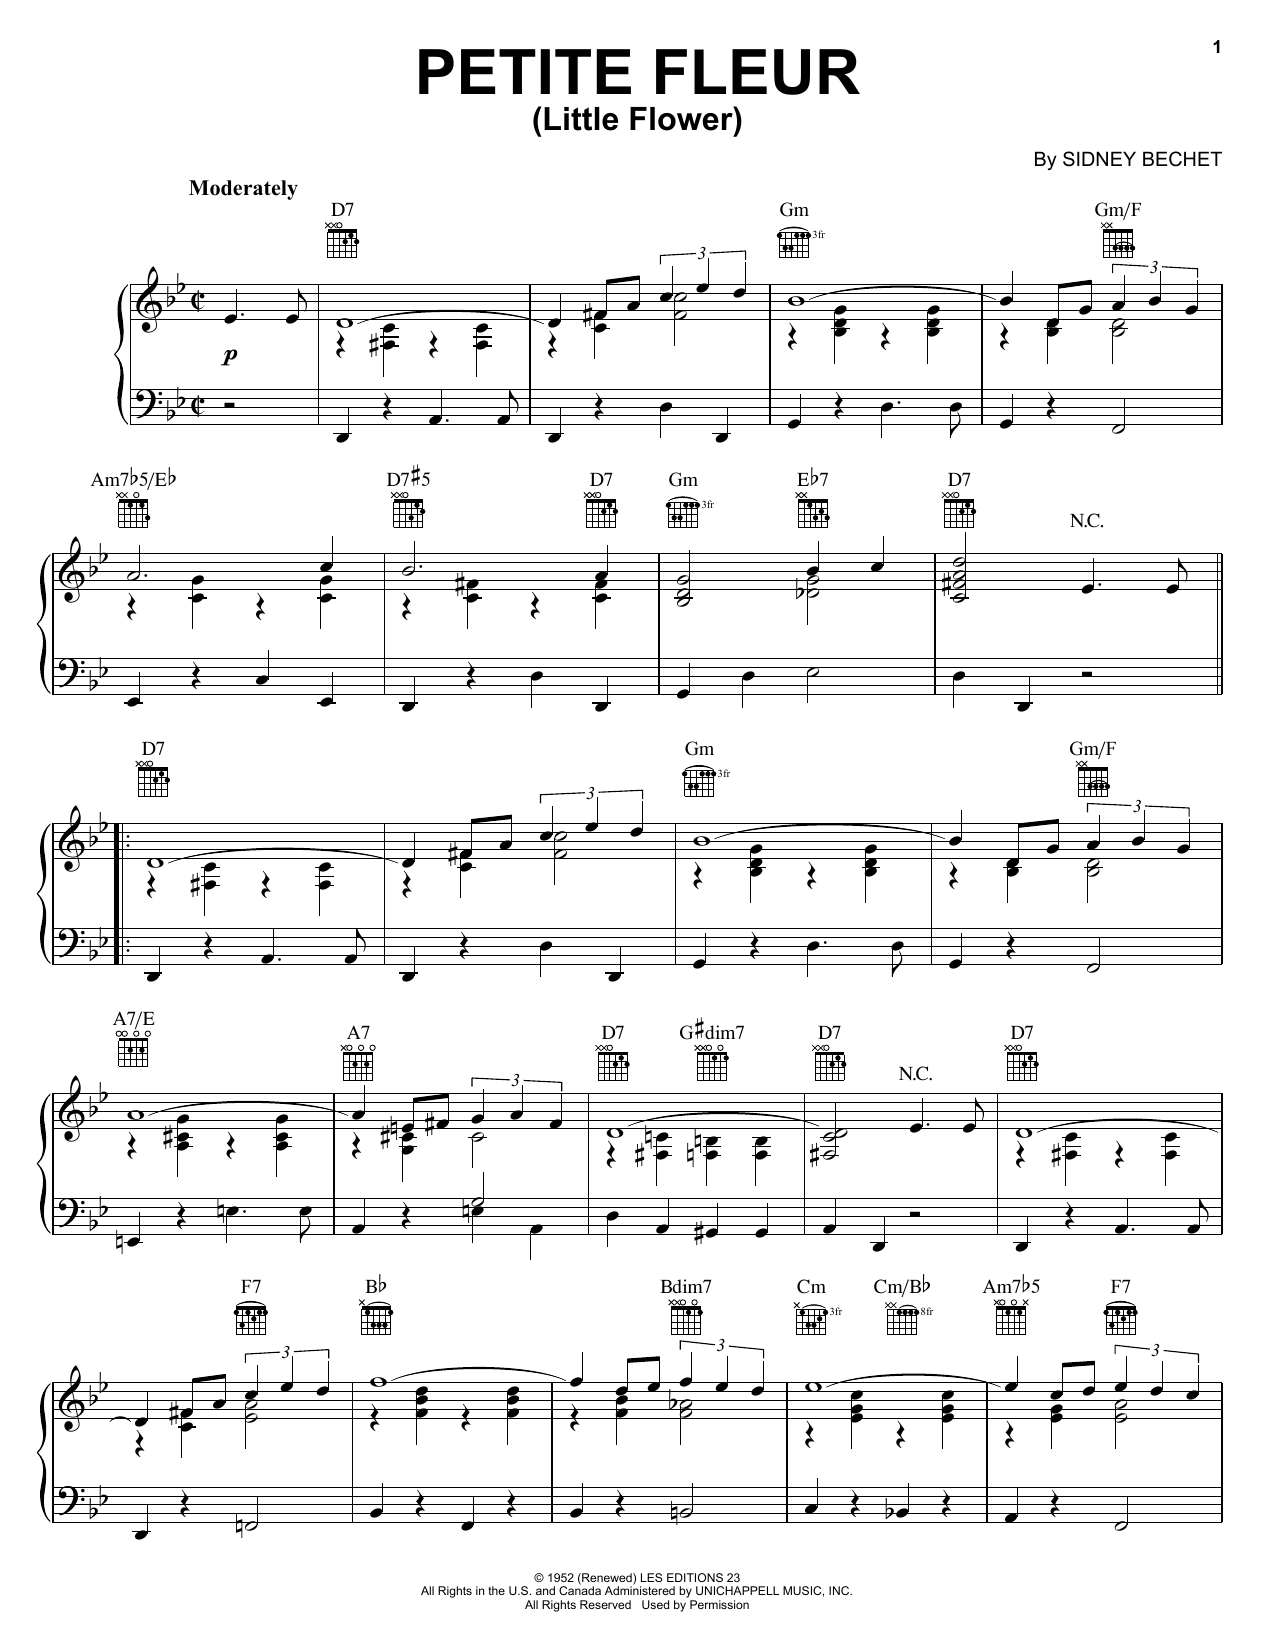 Sidney Bechet Petite Fleur (Little Flower) Sheet Music Notes & Chords for Flute - Download or Print PDF